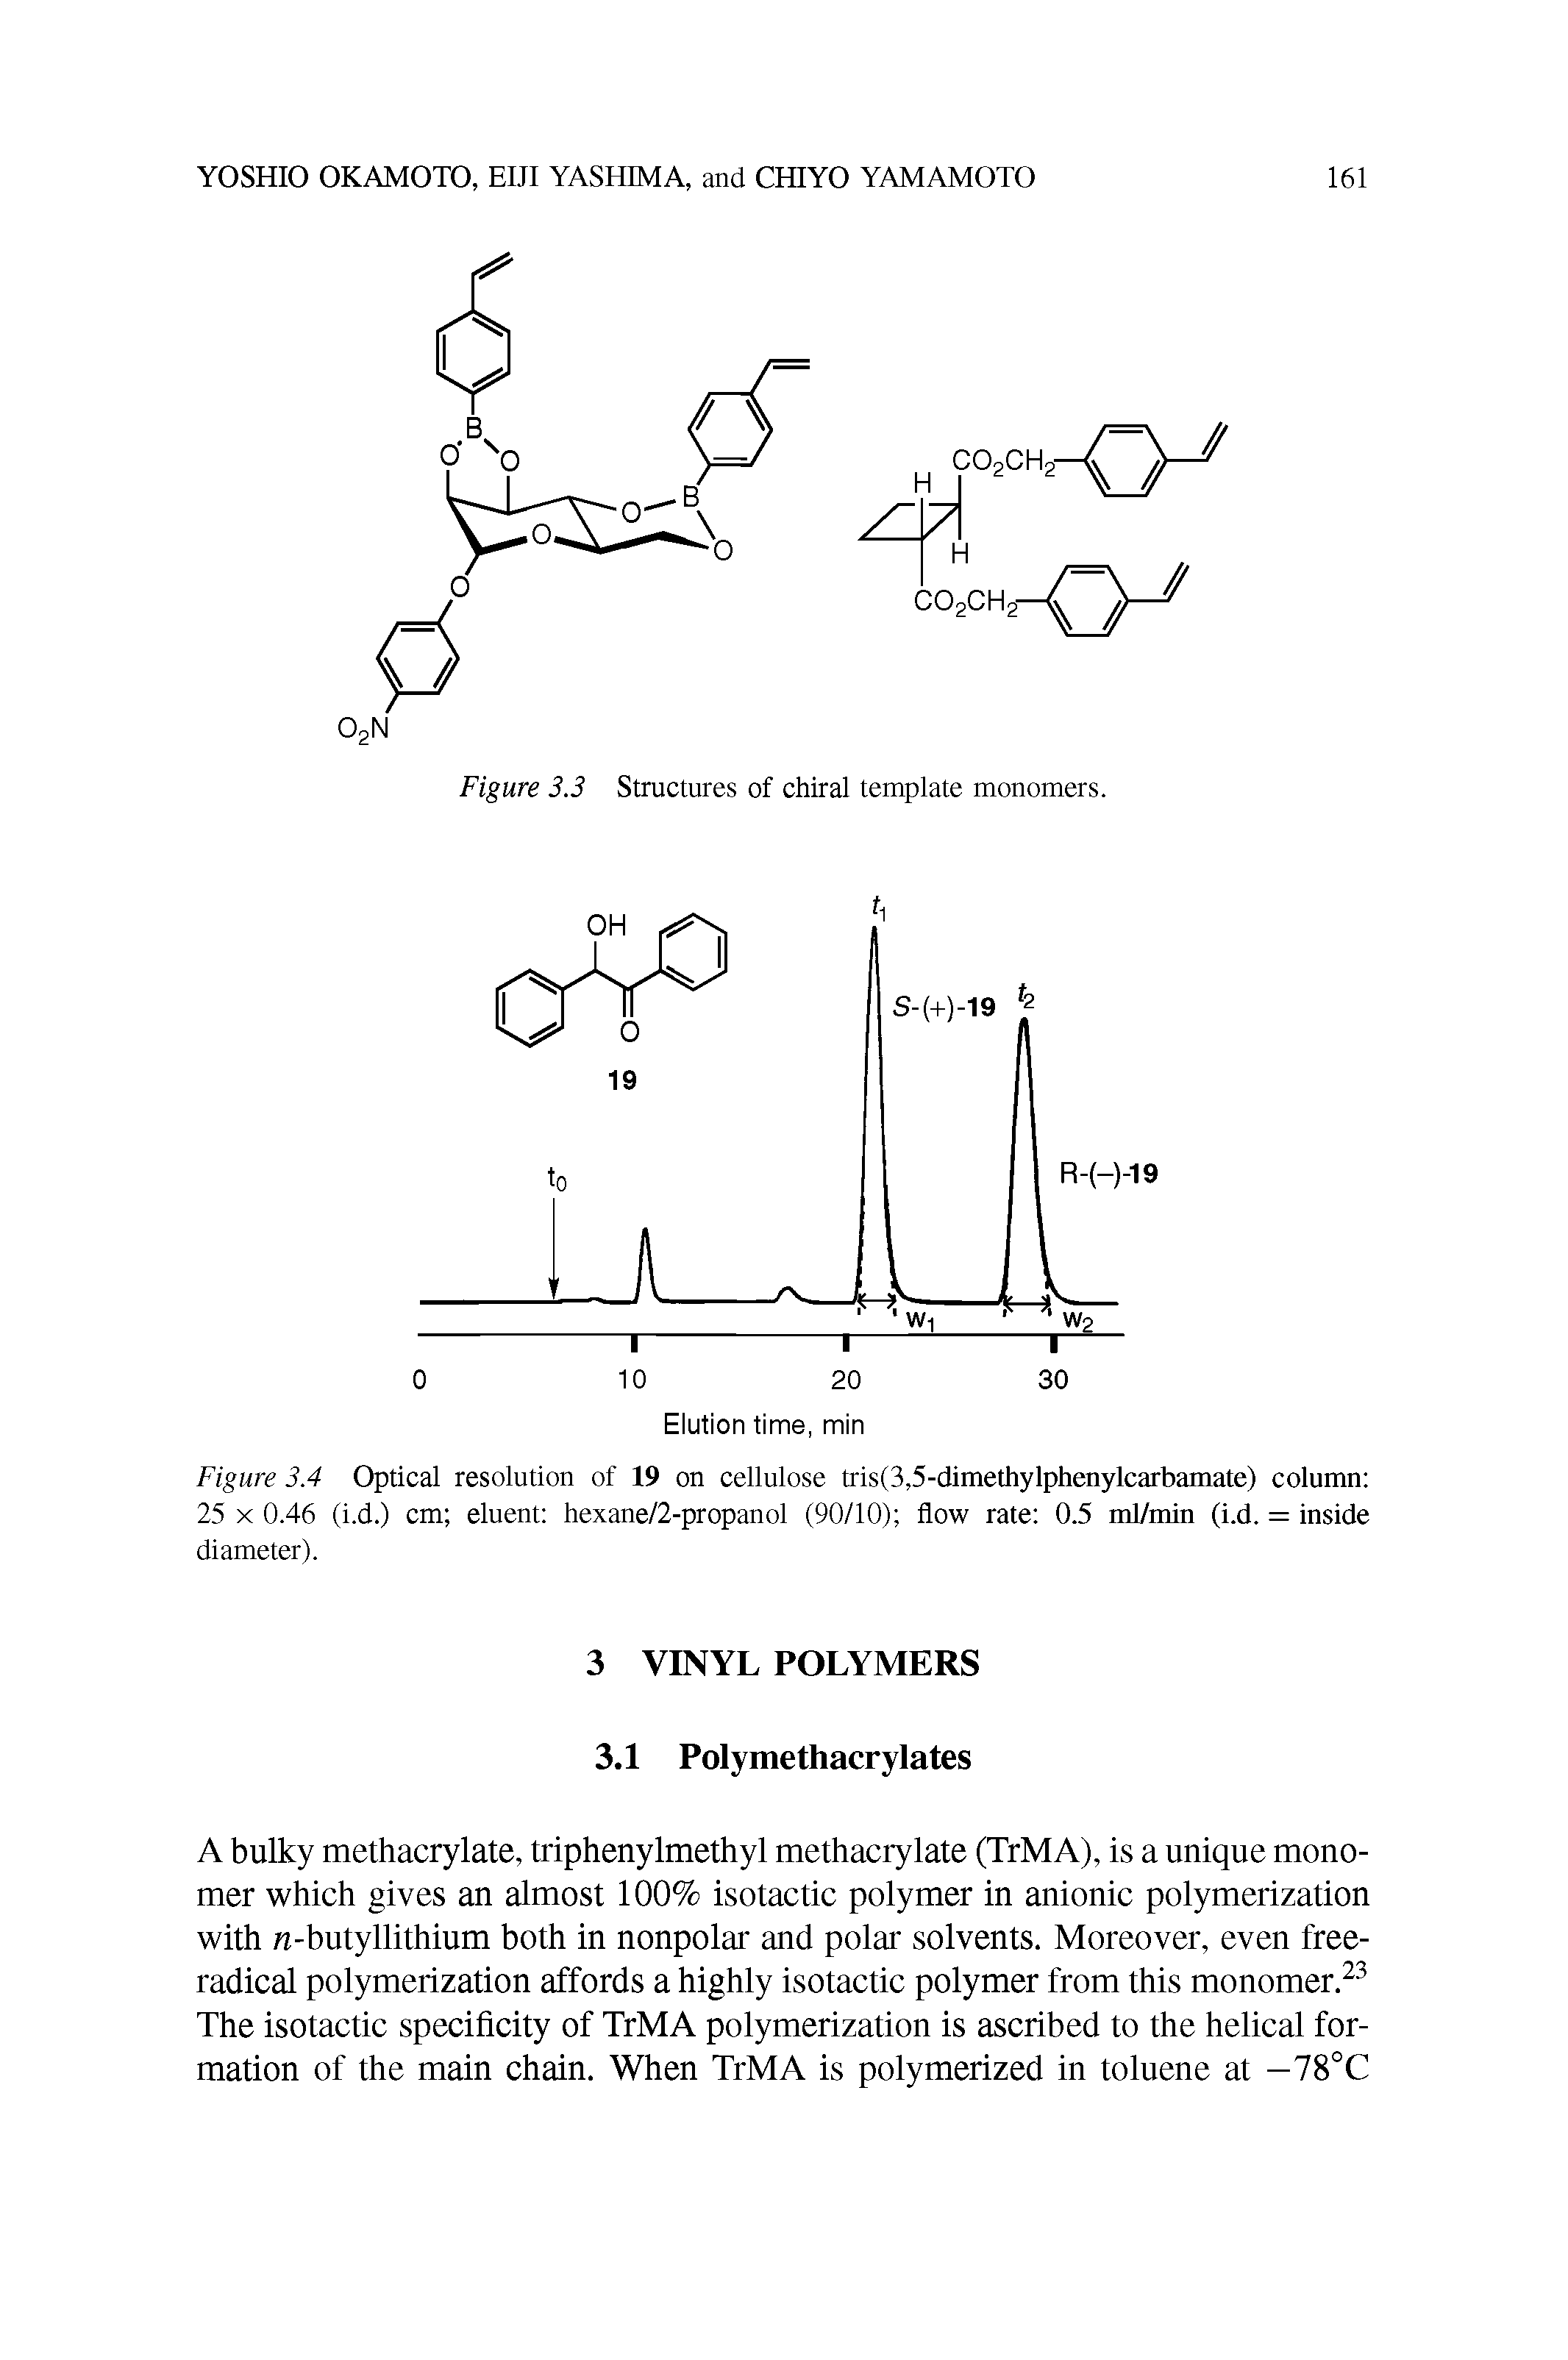 Figure 3.4 Optical resolution of 19 on cellulose tris(3,5-dimethylphenylcarbamate) column 25 x 0.46 (i.d.) cm eluent hexane/2-propanol (90/10) flow rate 0.5 ml/min (i.d. = inside diameter).